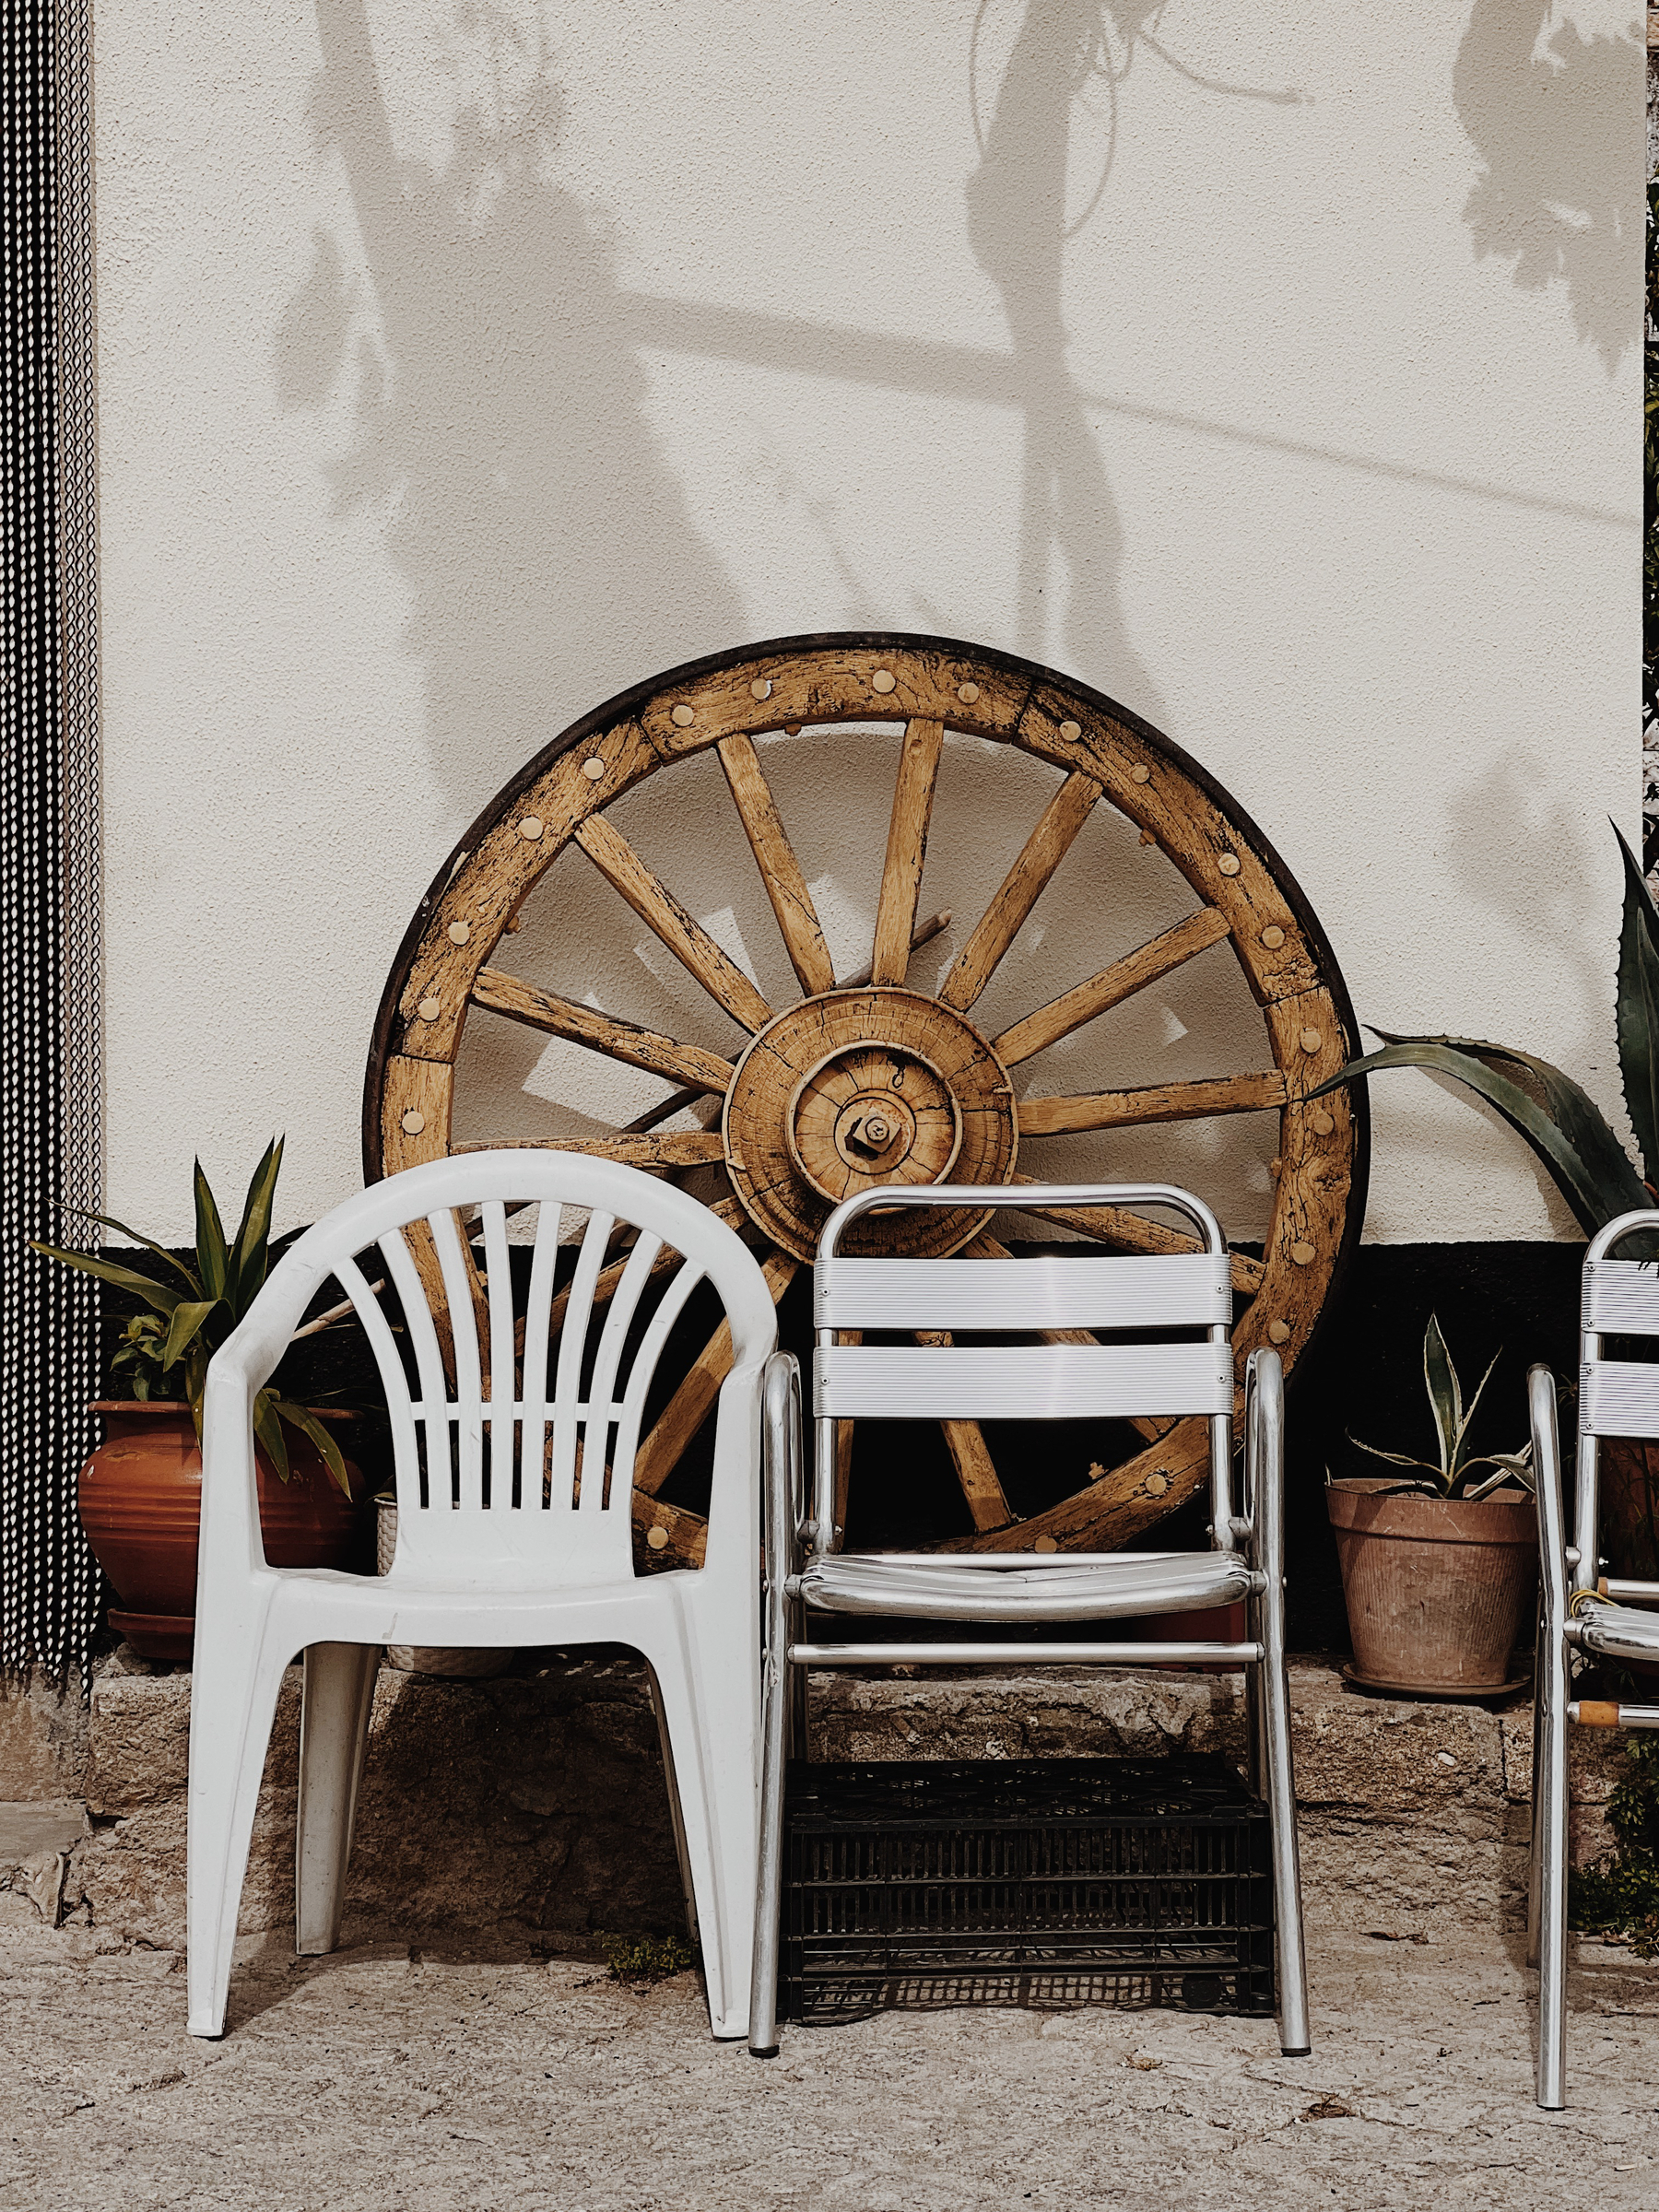 Chairs and a wagon wheel. 